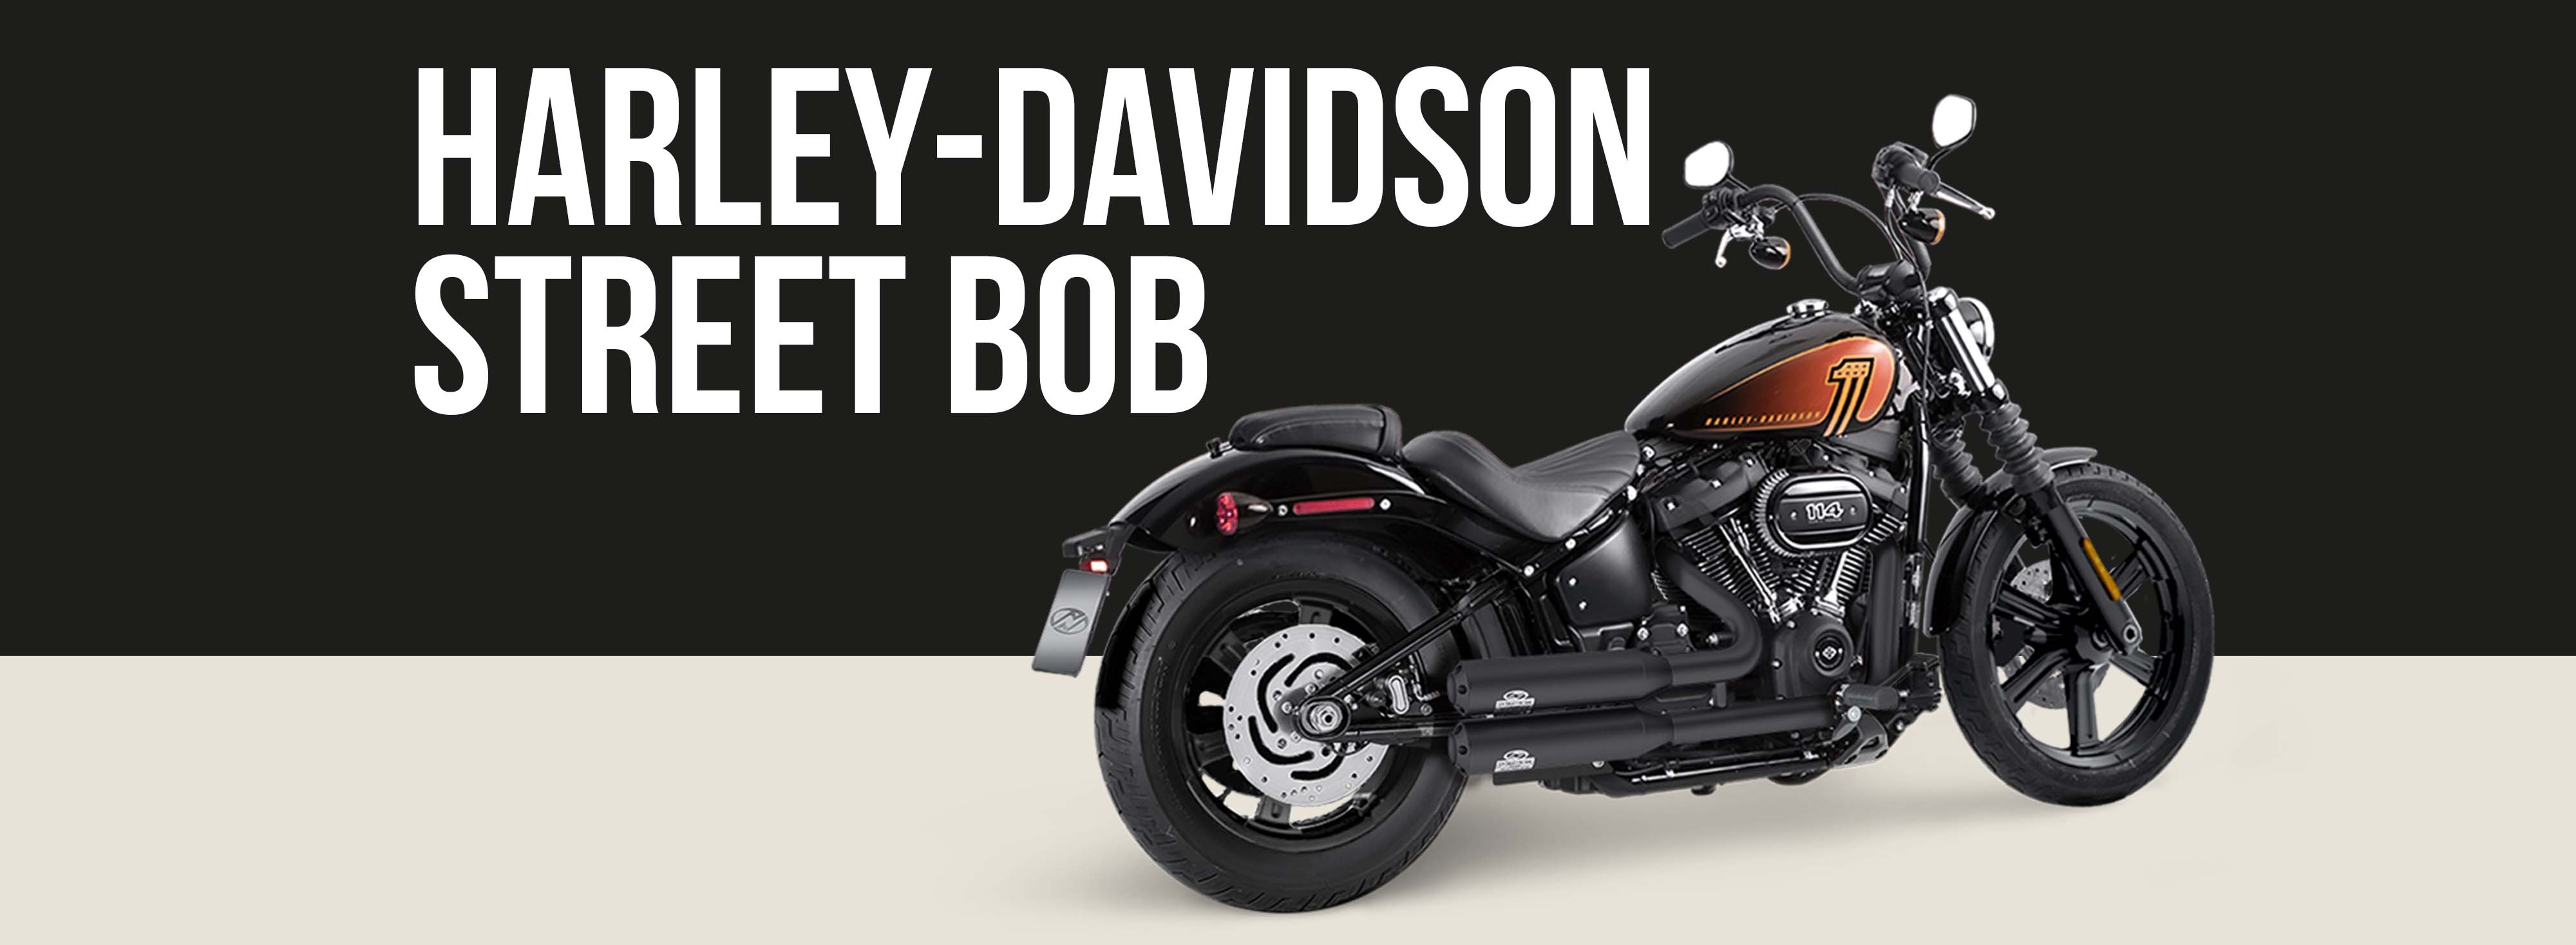 Harley-davidson Street Bob Motorcycle Brand Page Header